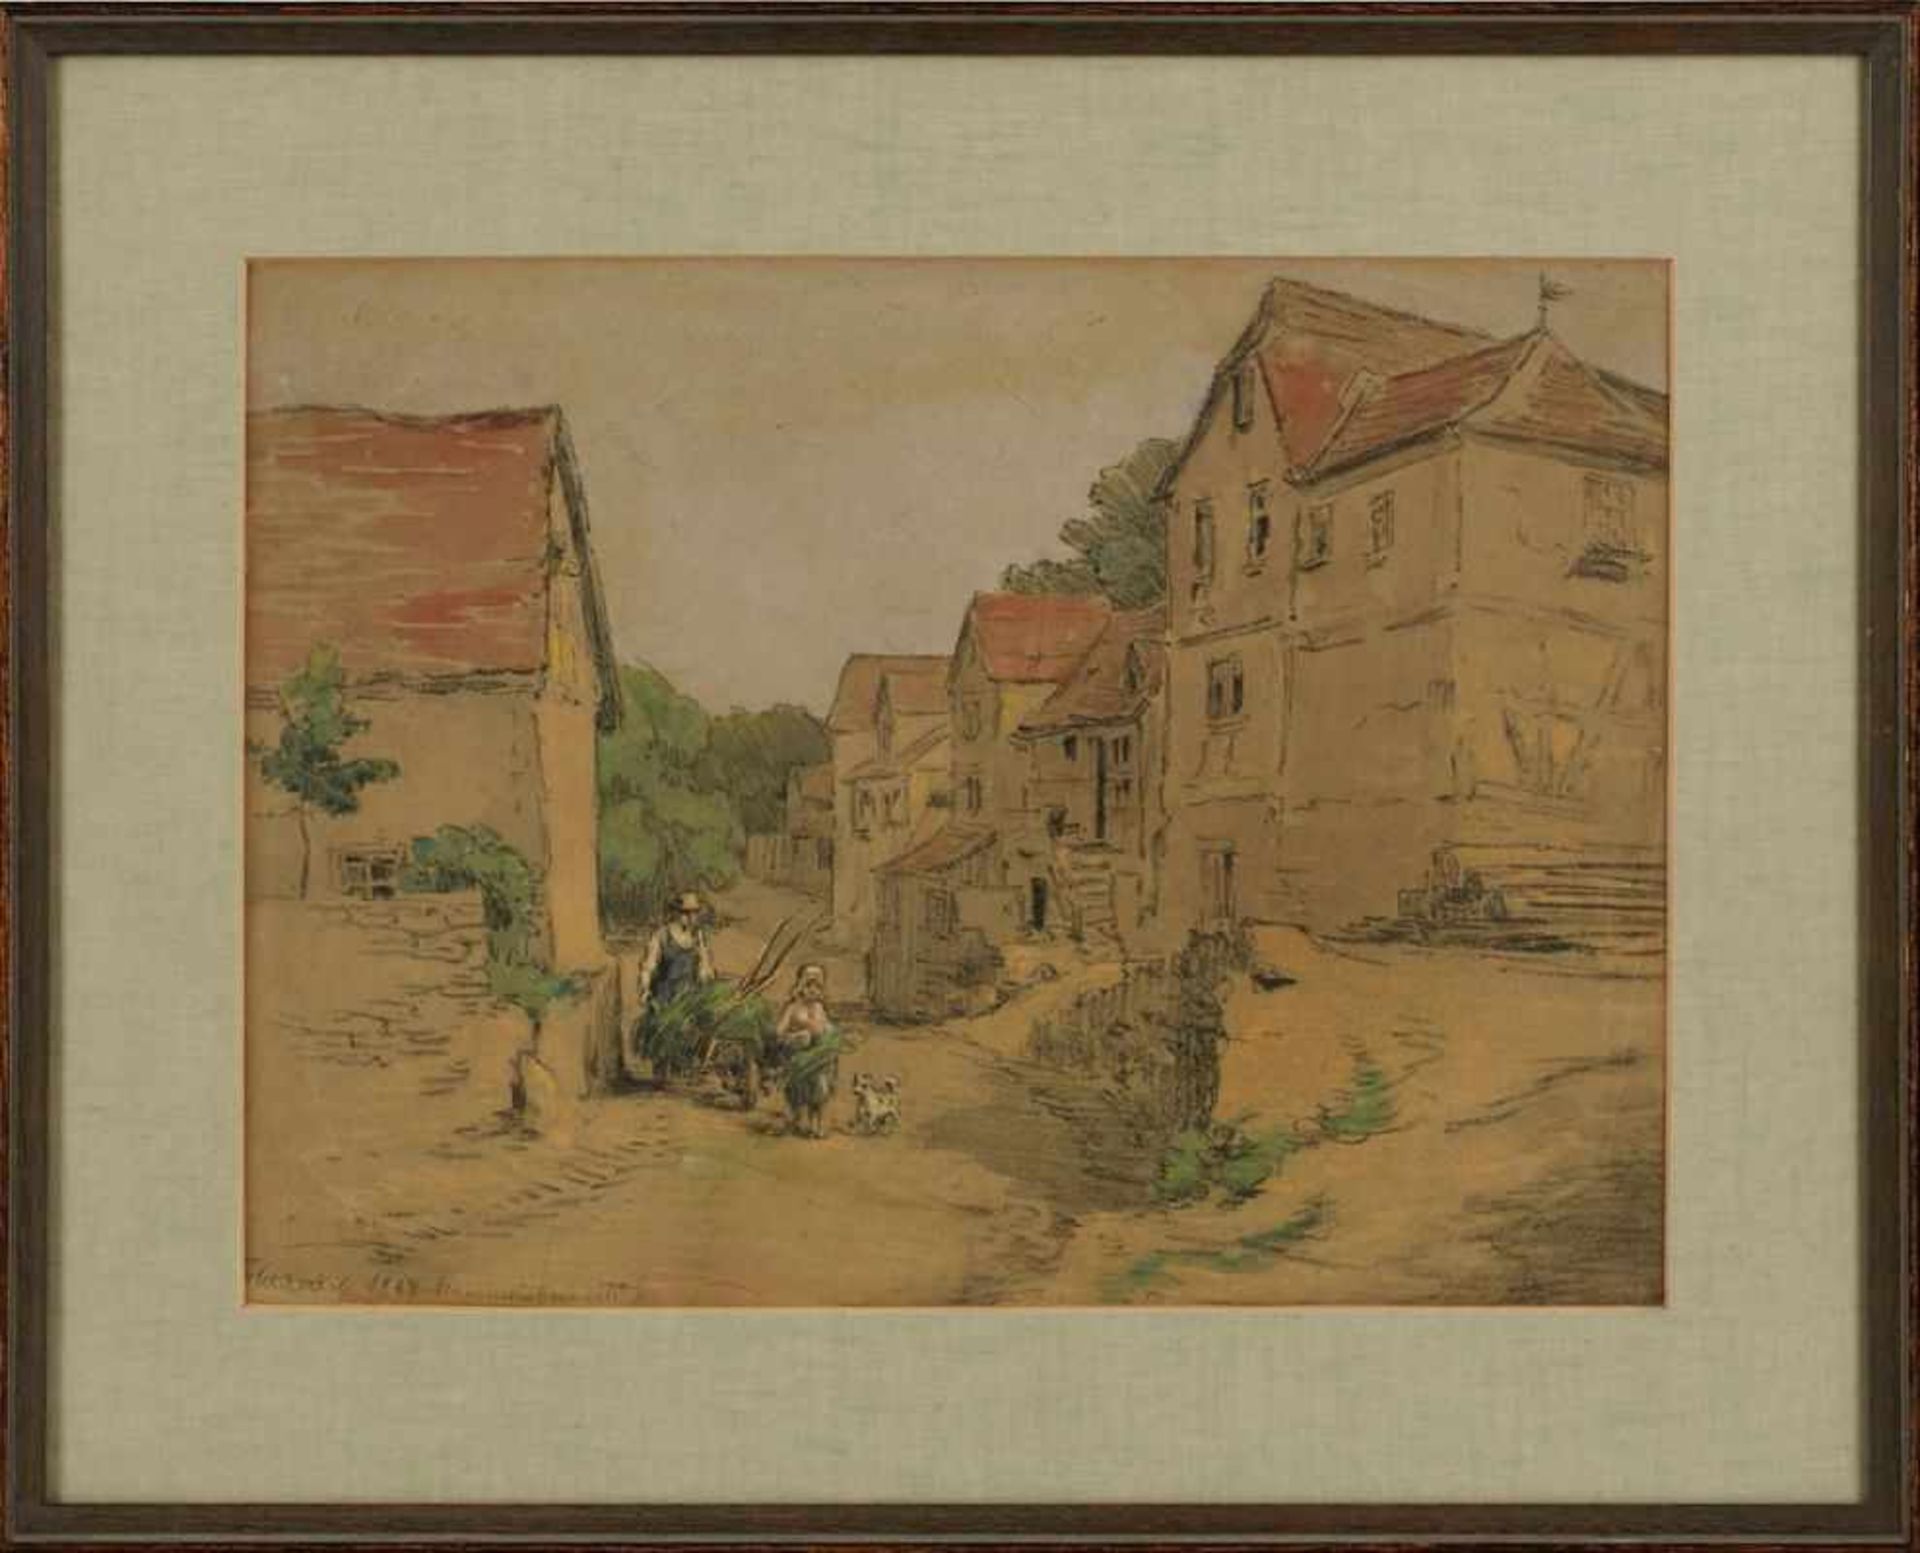 Kolorierte KohlezeichnungFritz Wucherer 1873 Basel - 1948 Kronberg "Straßenszene in Mammolshain"